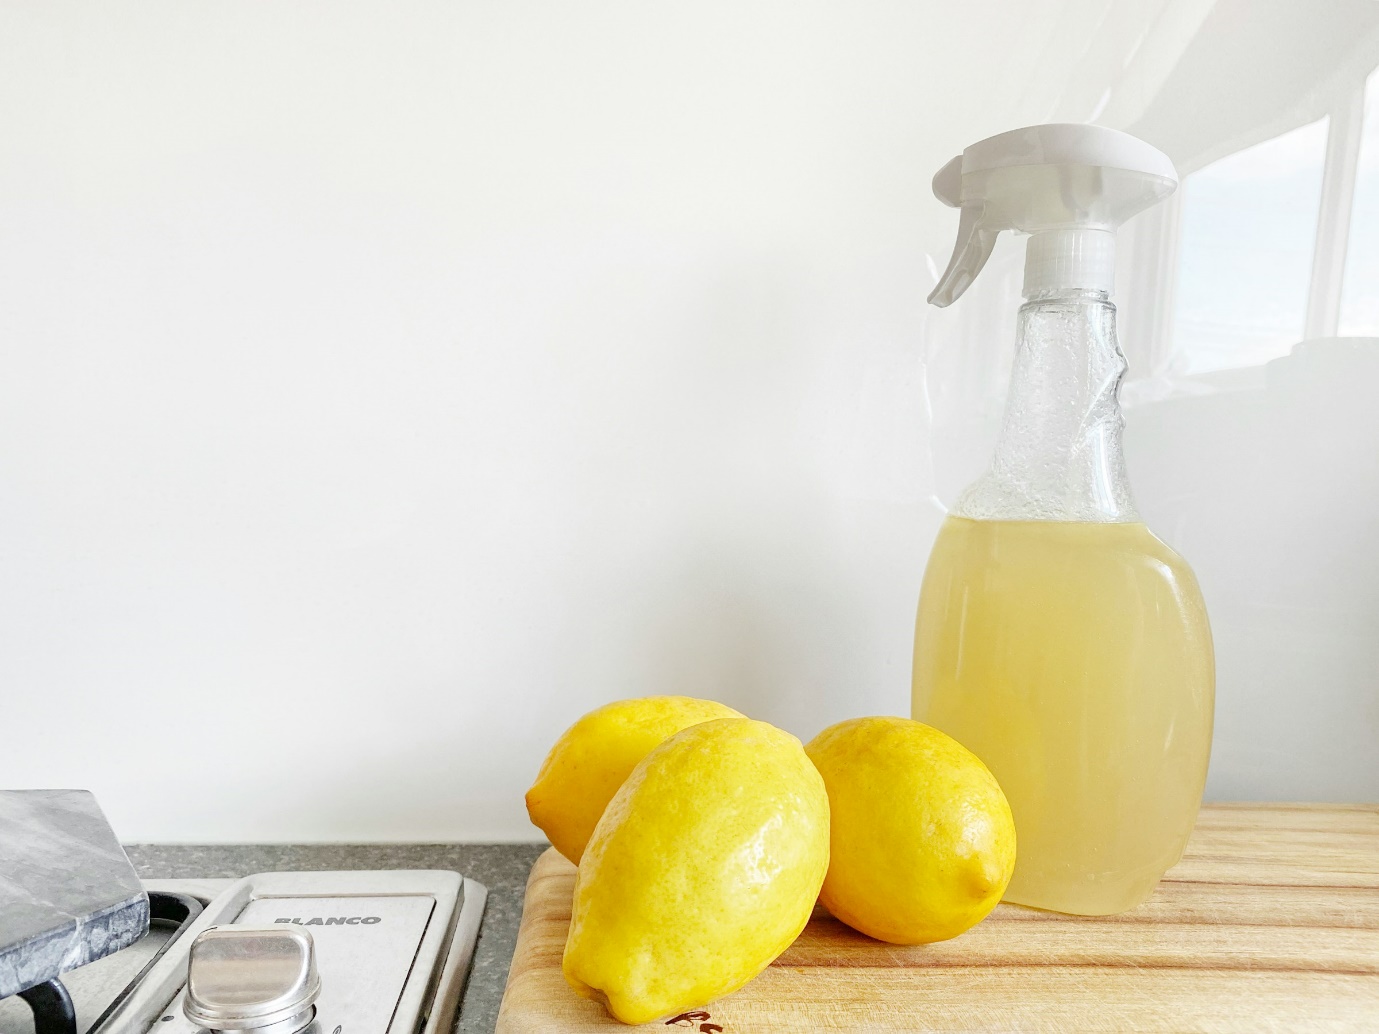 Lemons next to a spray bottle and lemons